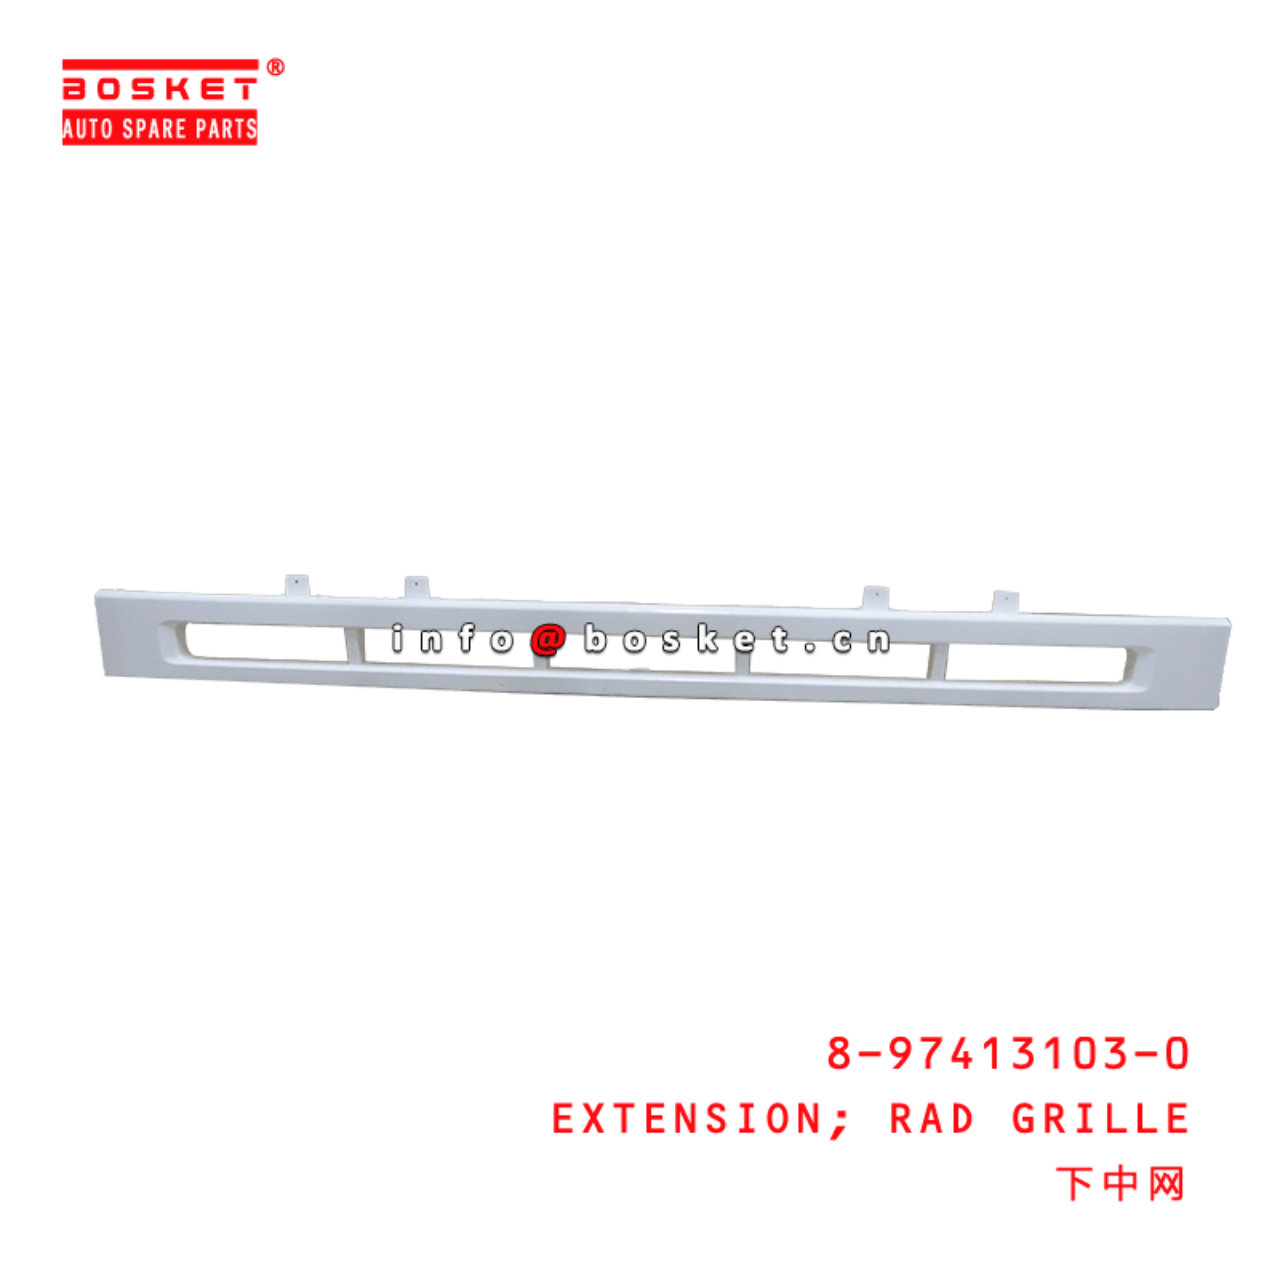  8-97413103-0 Rad Grille Extension 8974131030 Suitable for ISUZU GXR